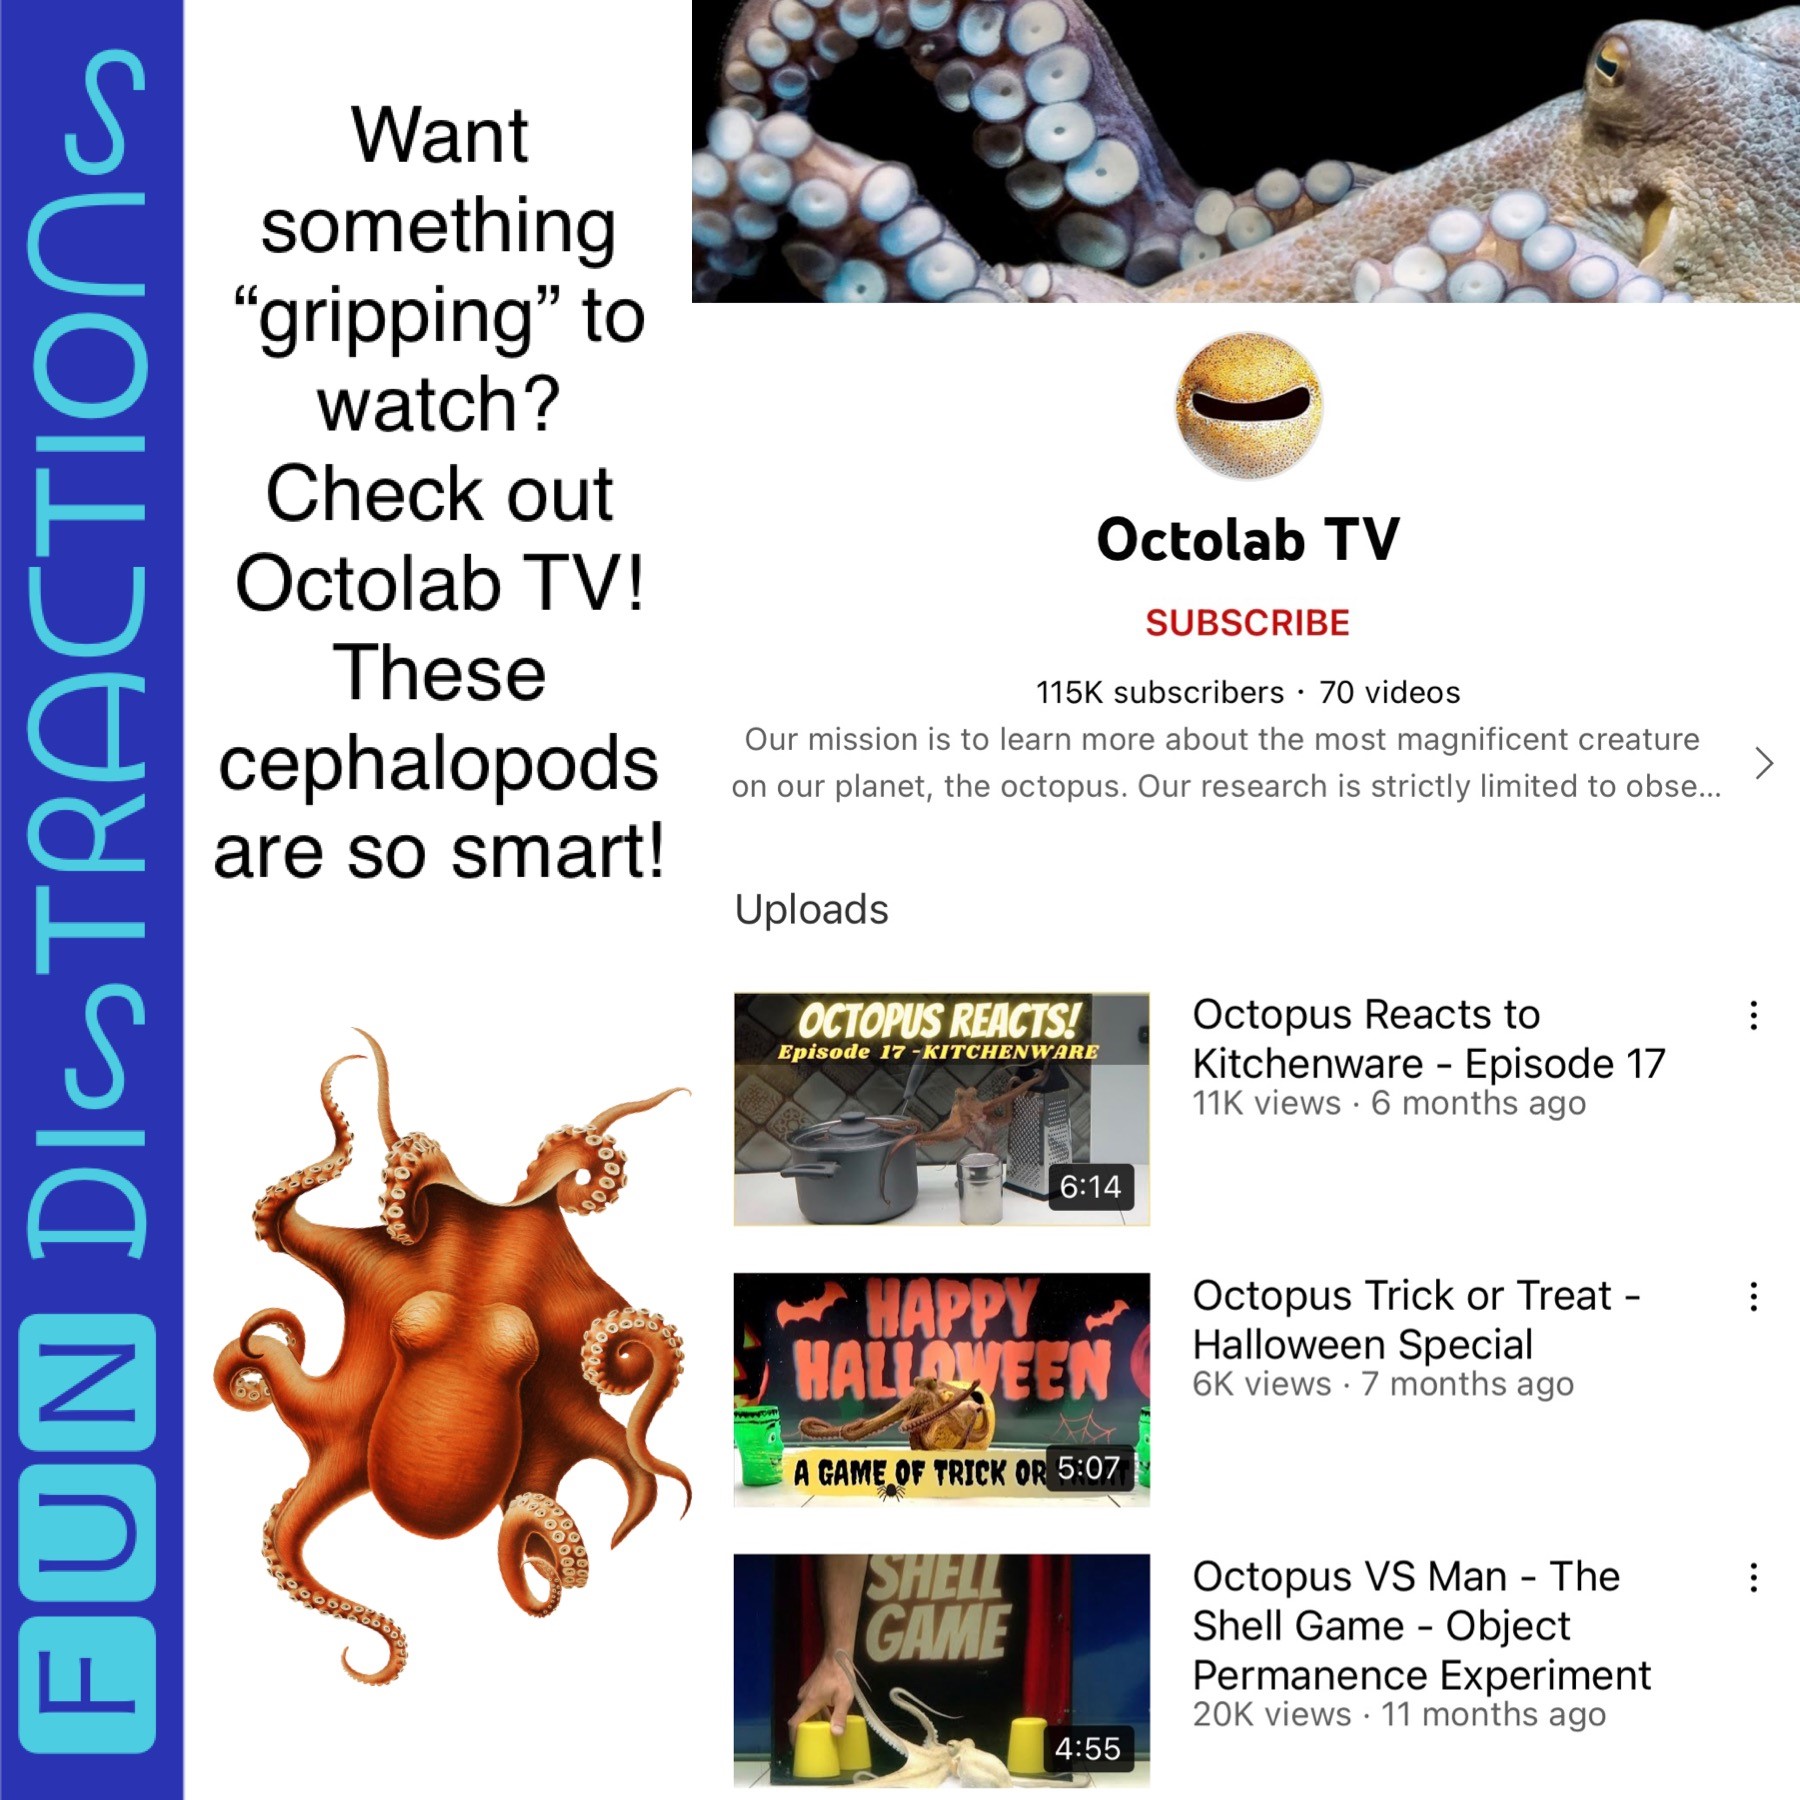 Octolab TV on YouTube